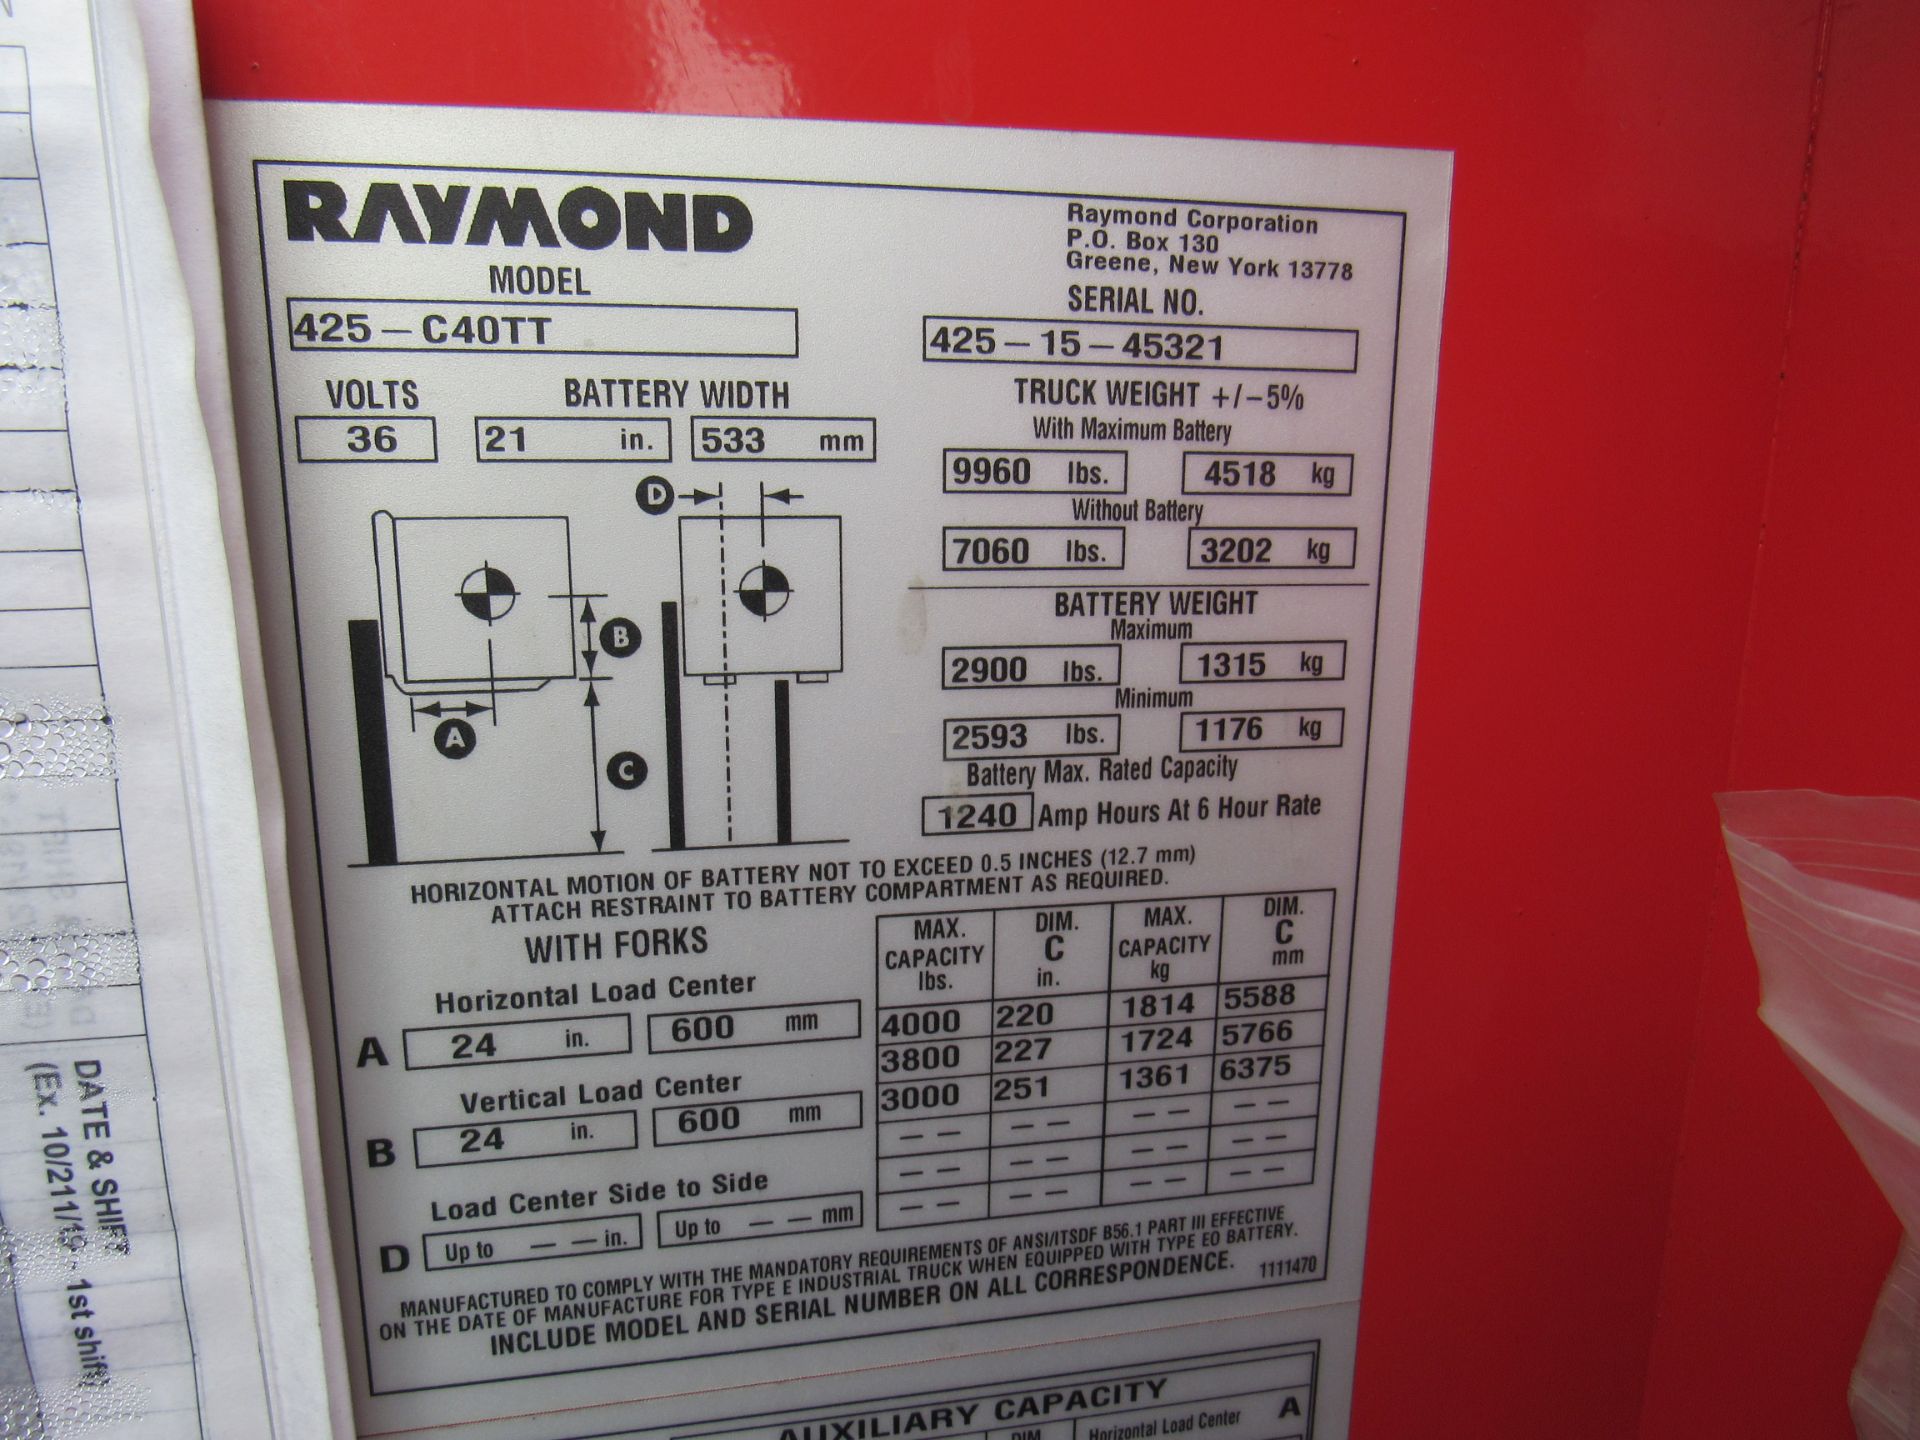 Raymond Forklift, Model #425-C40TT, S/N #425-15-45321, Truck Weight W/ Max Battery = 9960 Lb - Image 6 of 10